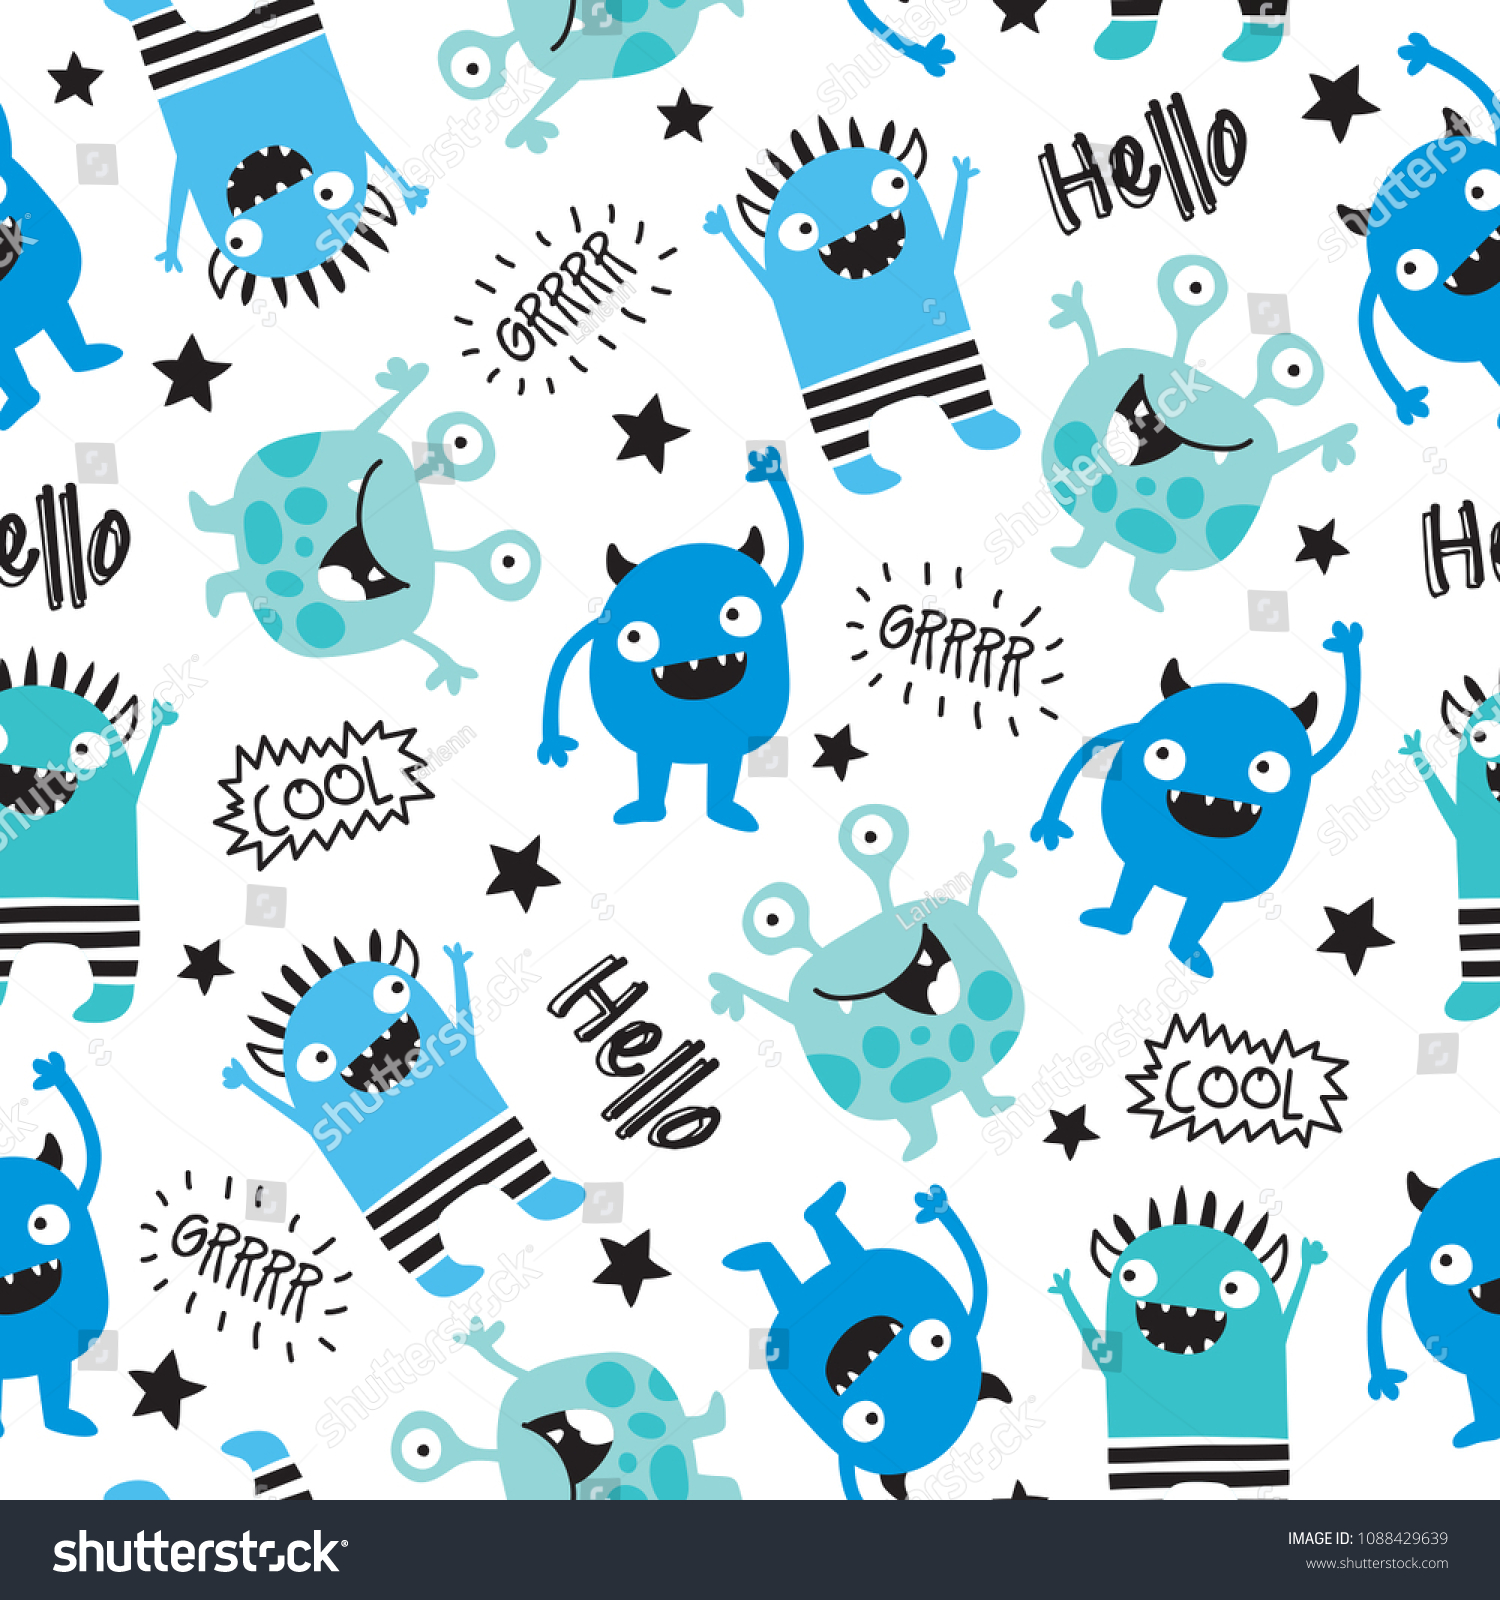 5,530 Little monster patterns Images, Stock Photos & Vectors | Shutterstock